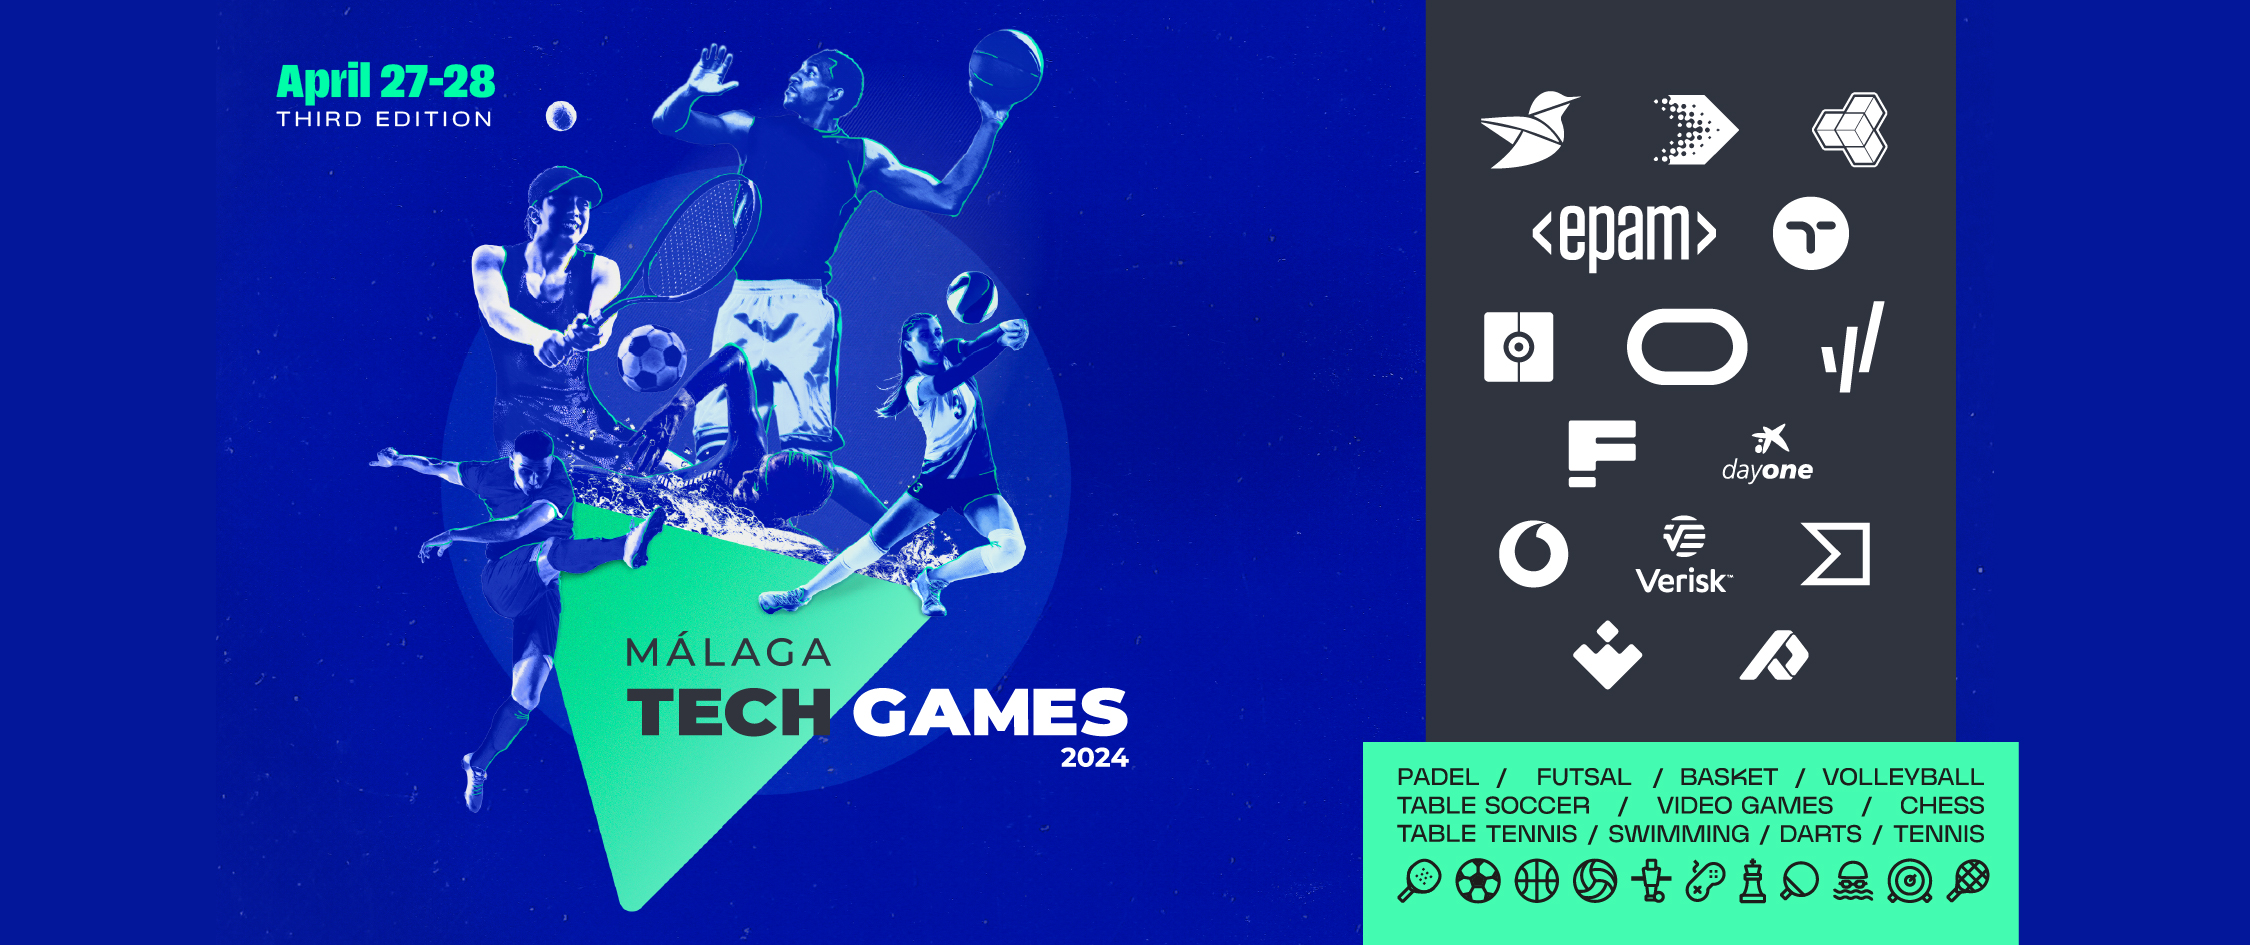 Málaga Tech Games: Innovación y deporte unidos en Málaga 23